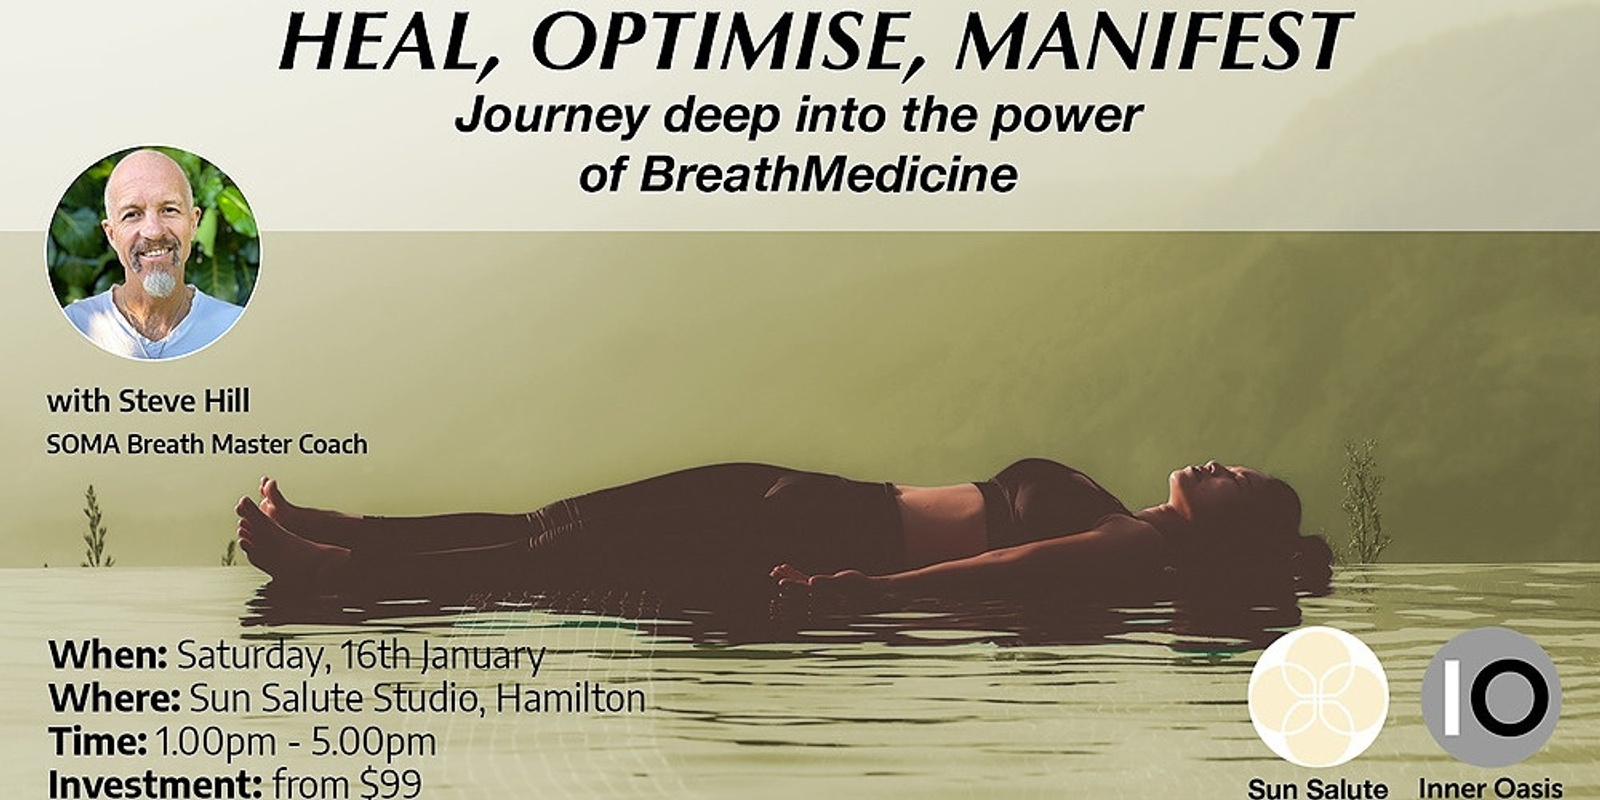 Banner image for BreathMedicine Workshop - HEAL, OPTIMISE, MANIFEST through breathwork | Hamilton